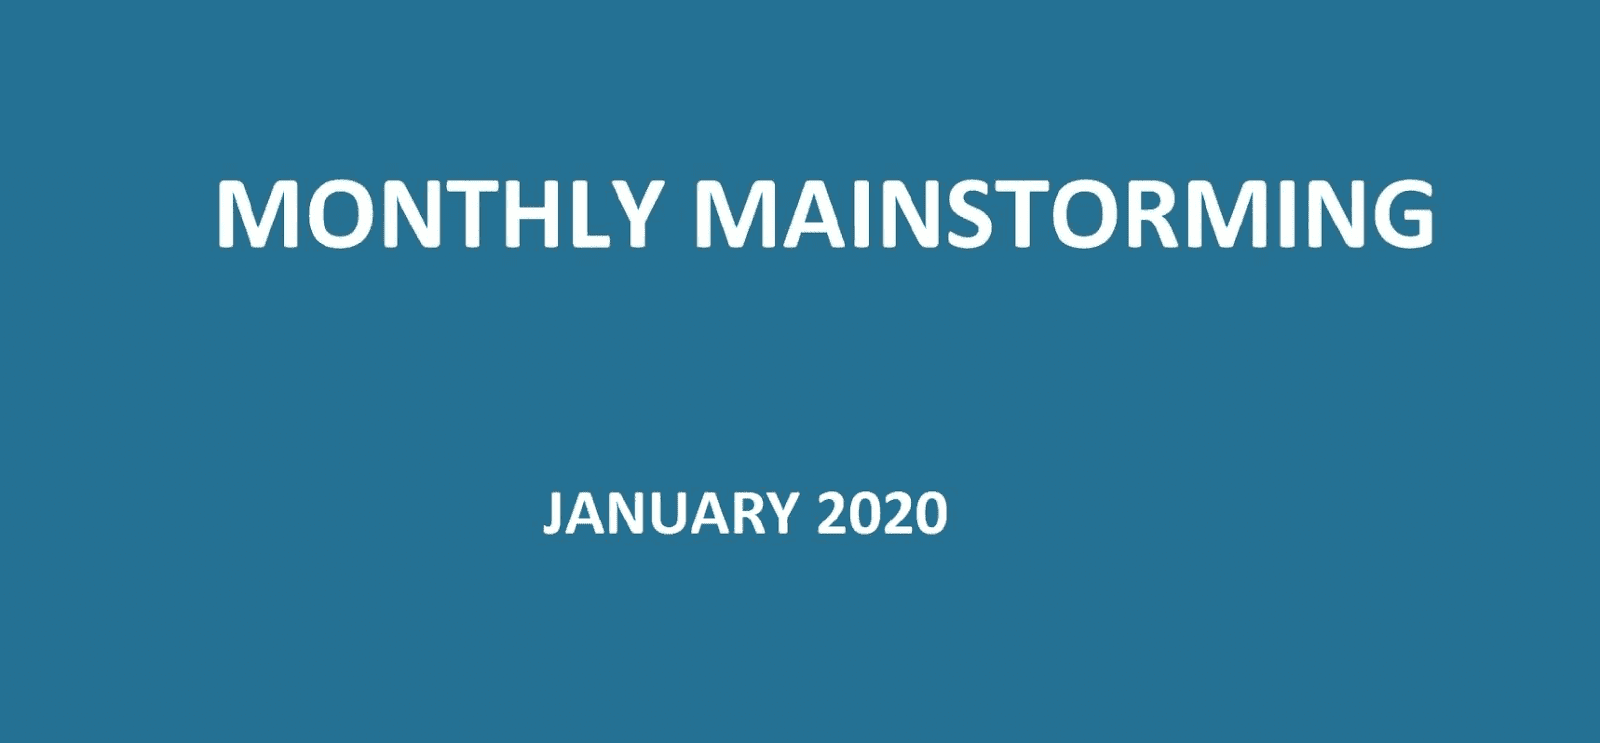 UPSC Mainstorming - January 2020